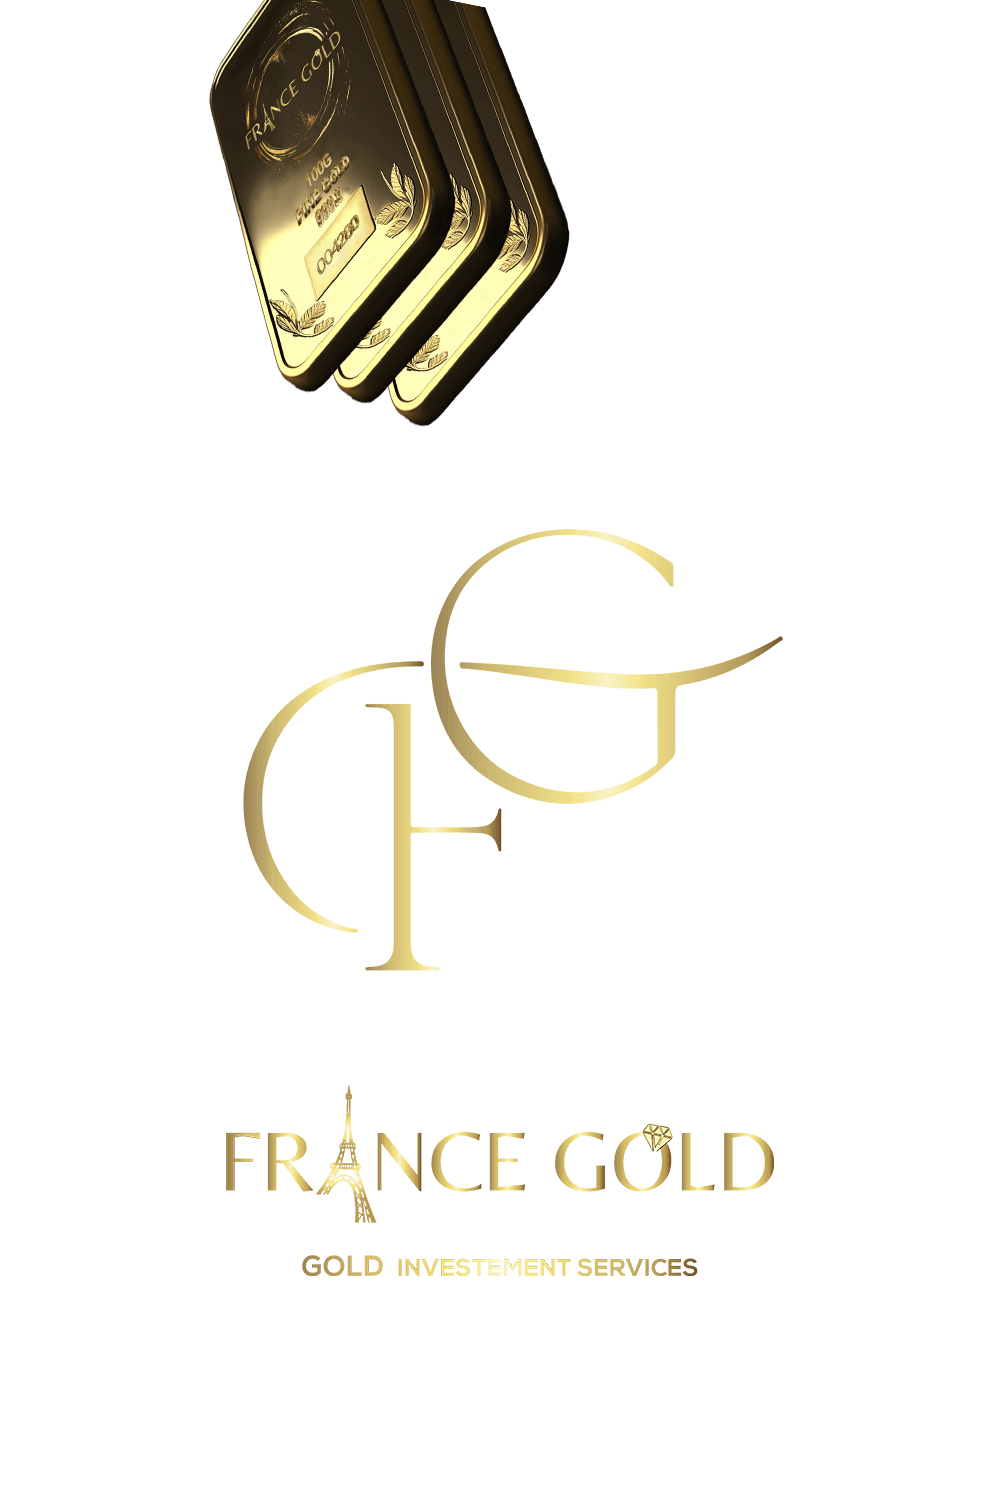 France gold 3 lingots withe bg